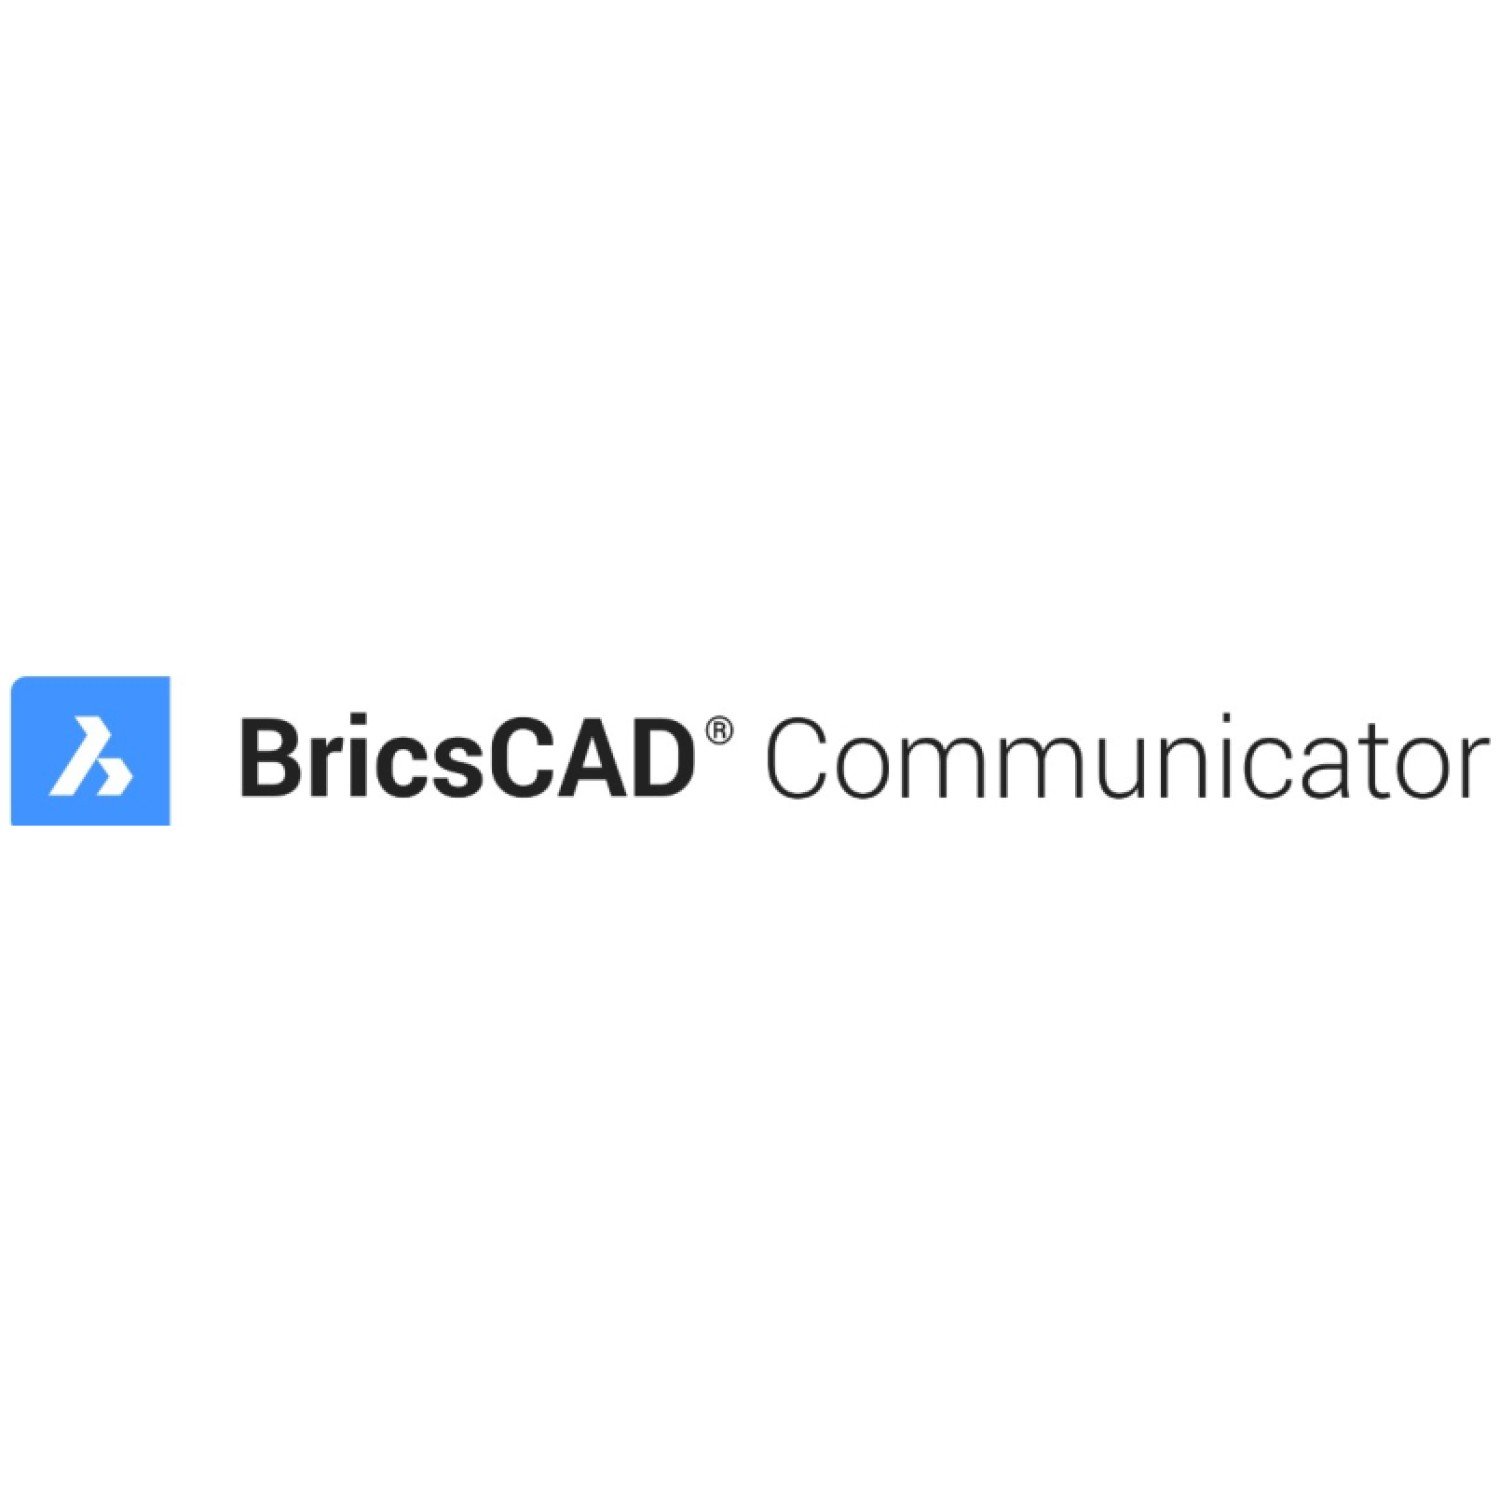 Communicator for BricsCAD network